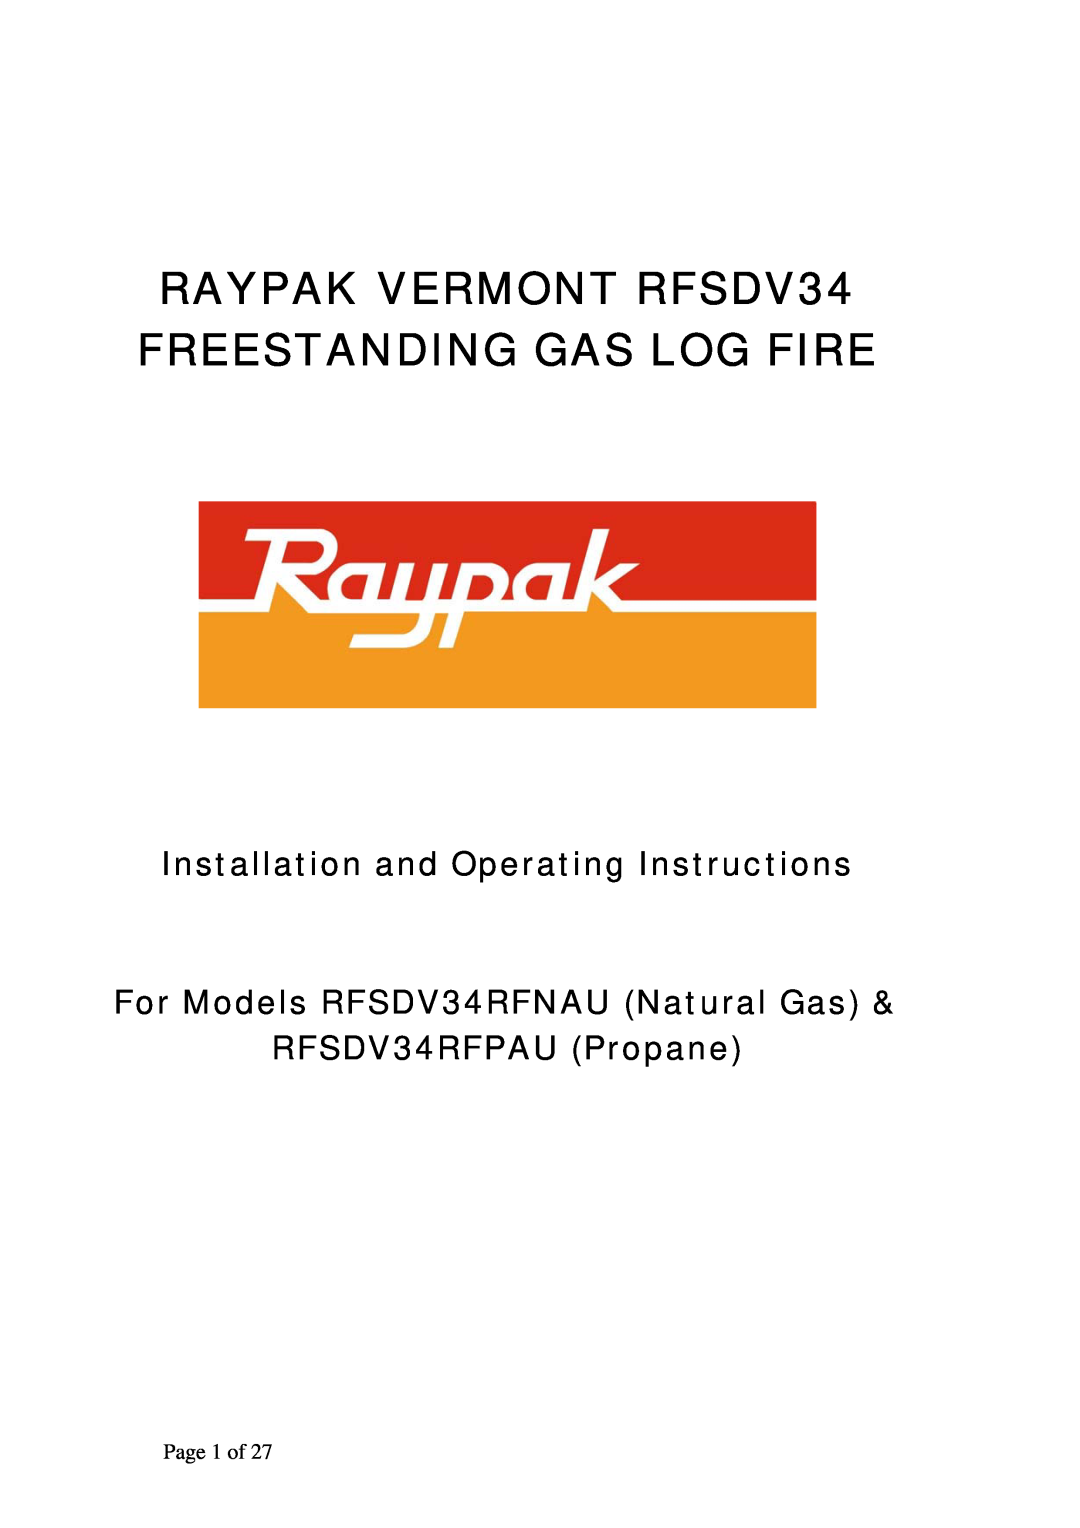 Raypak RFSDV34RFPAU manual Installation and Operating Instructions, For Models RFSDV34RFNAU Natural Gas, Page 1 of 